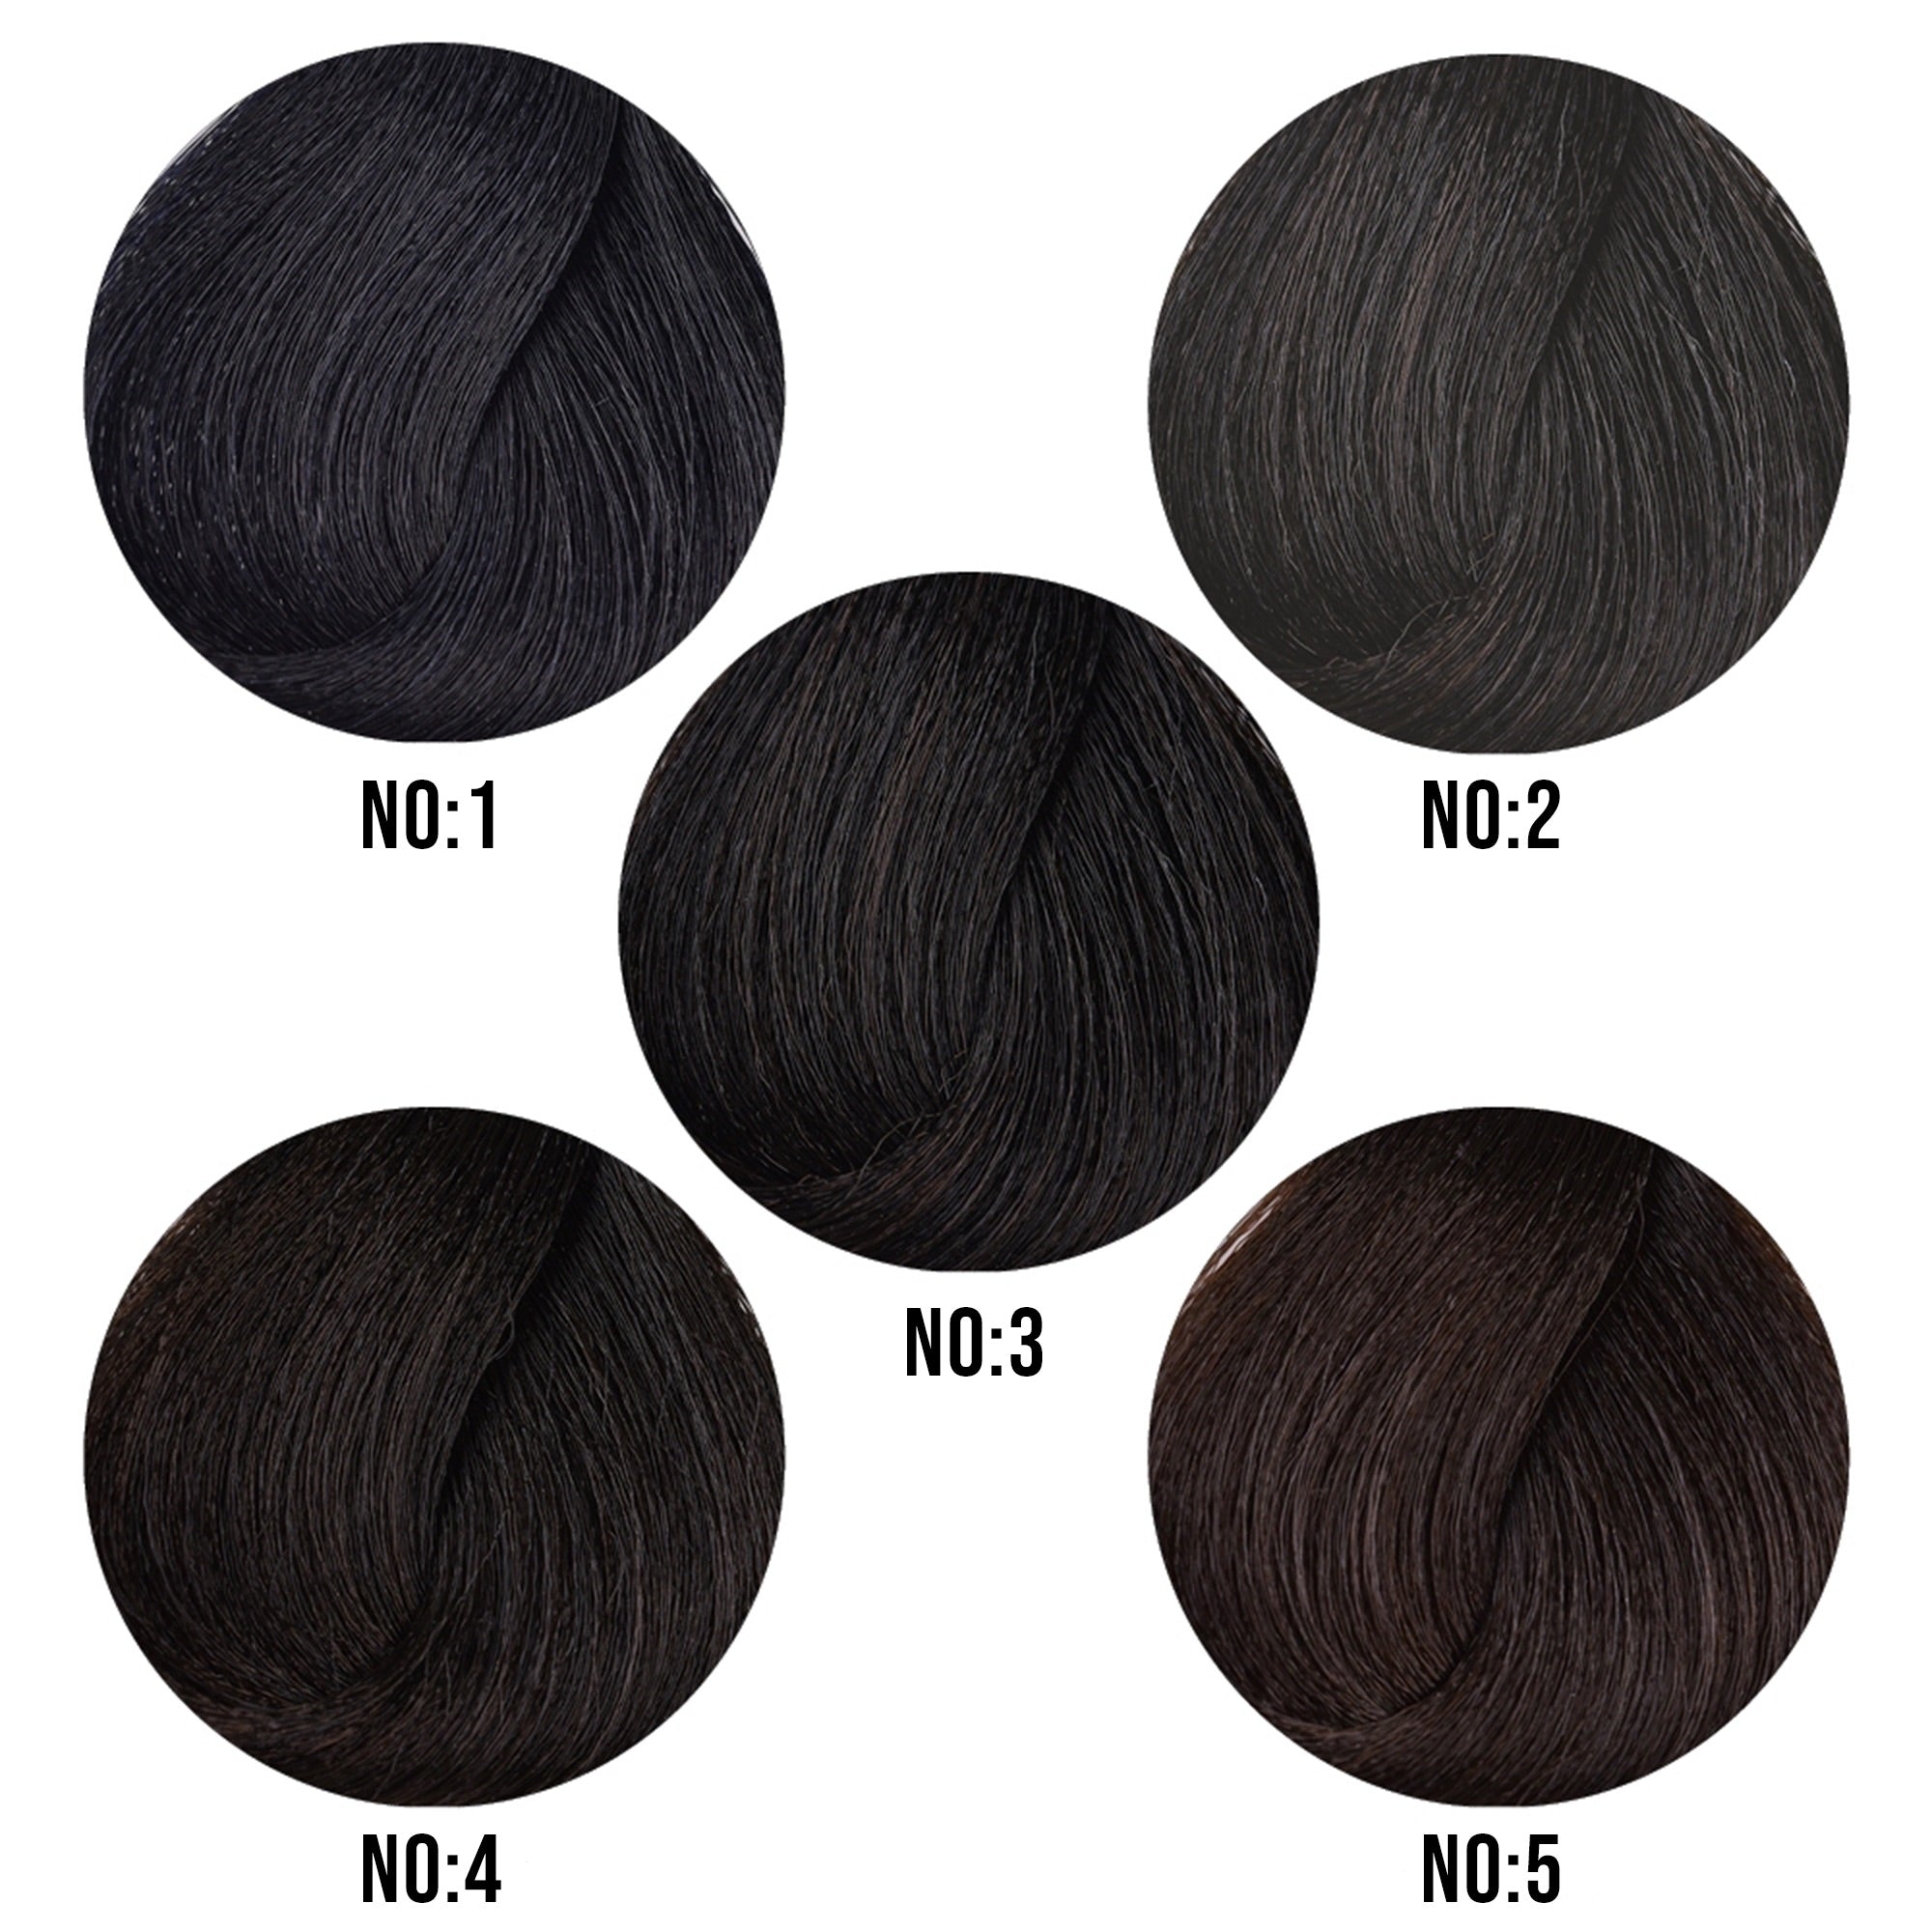 Morfose - Ossion Hair Color Gel 1 Natural Black 40ml